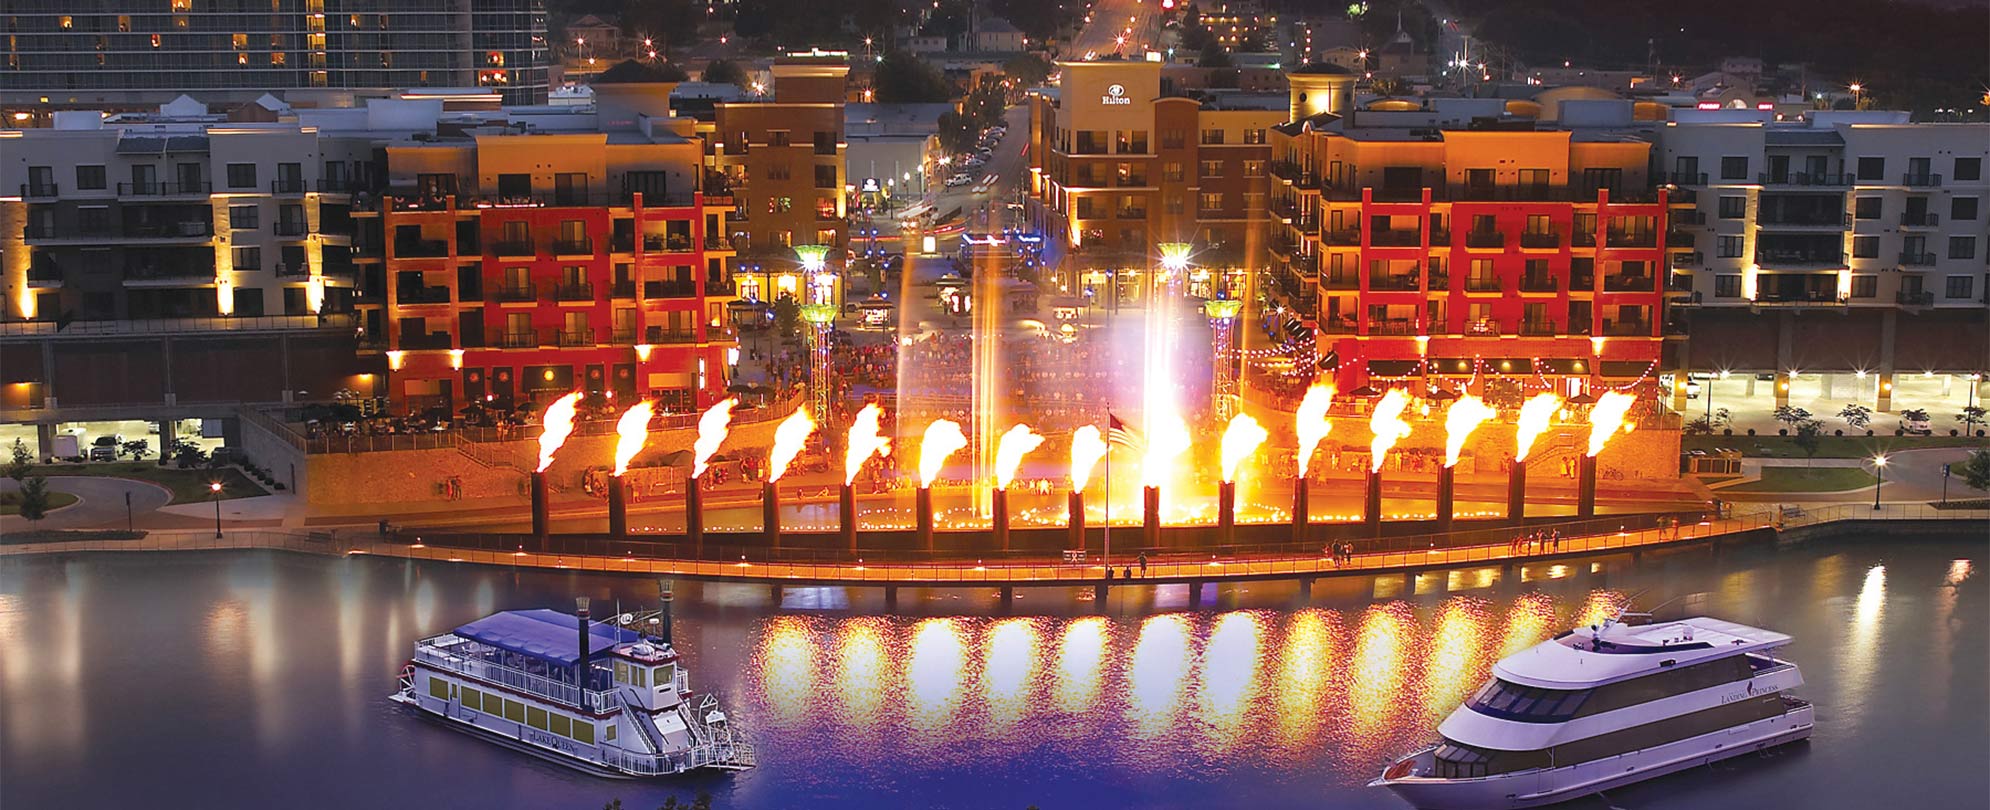 Fifteen pillars lit up in flames along the water in Branson, Missouri.